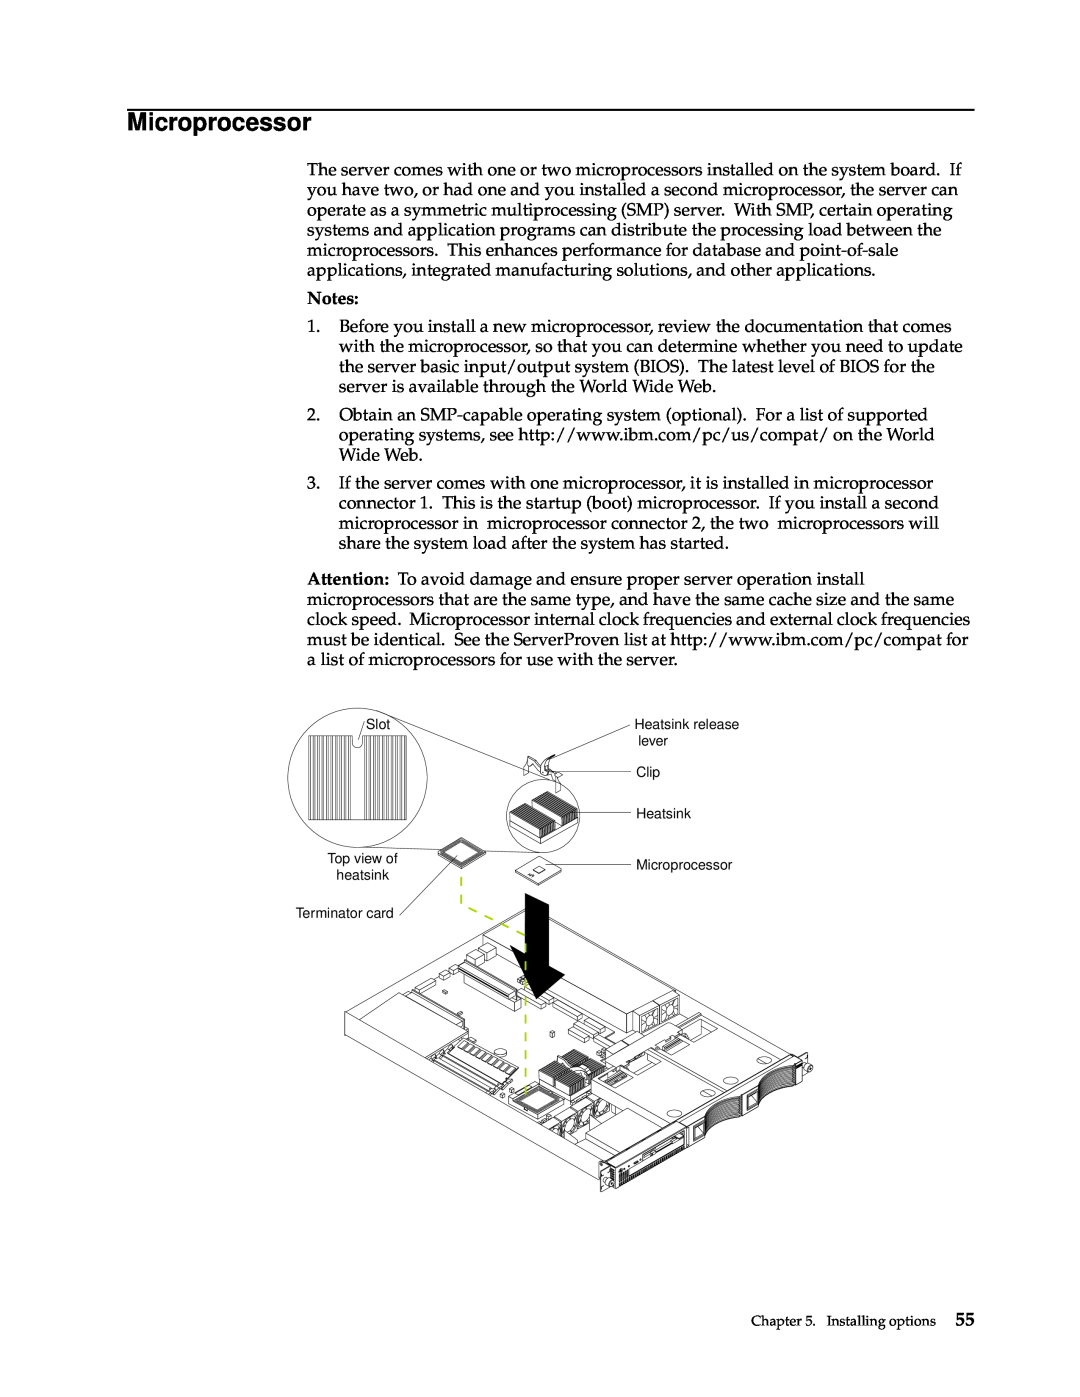 IBM xSeries 330 manual Microprocessor, Notes, Slot, Heatsink release, lever, Clip, heatsink, Terminator card 